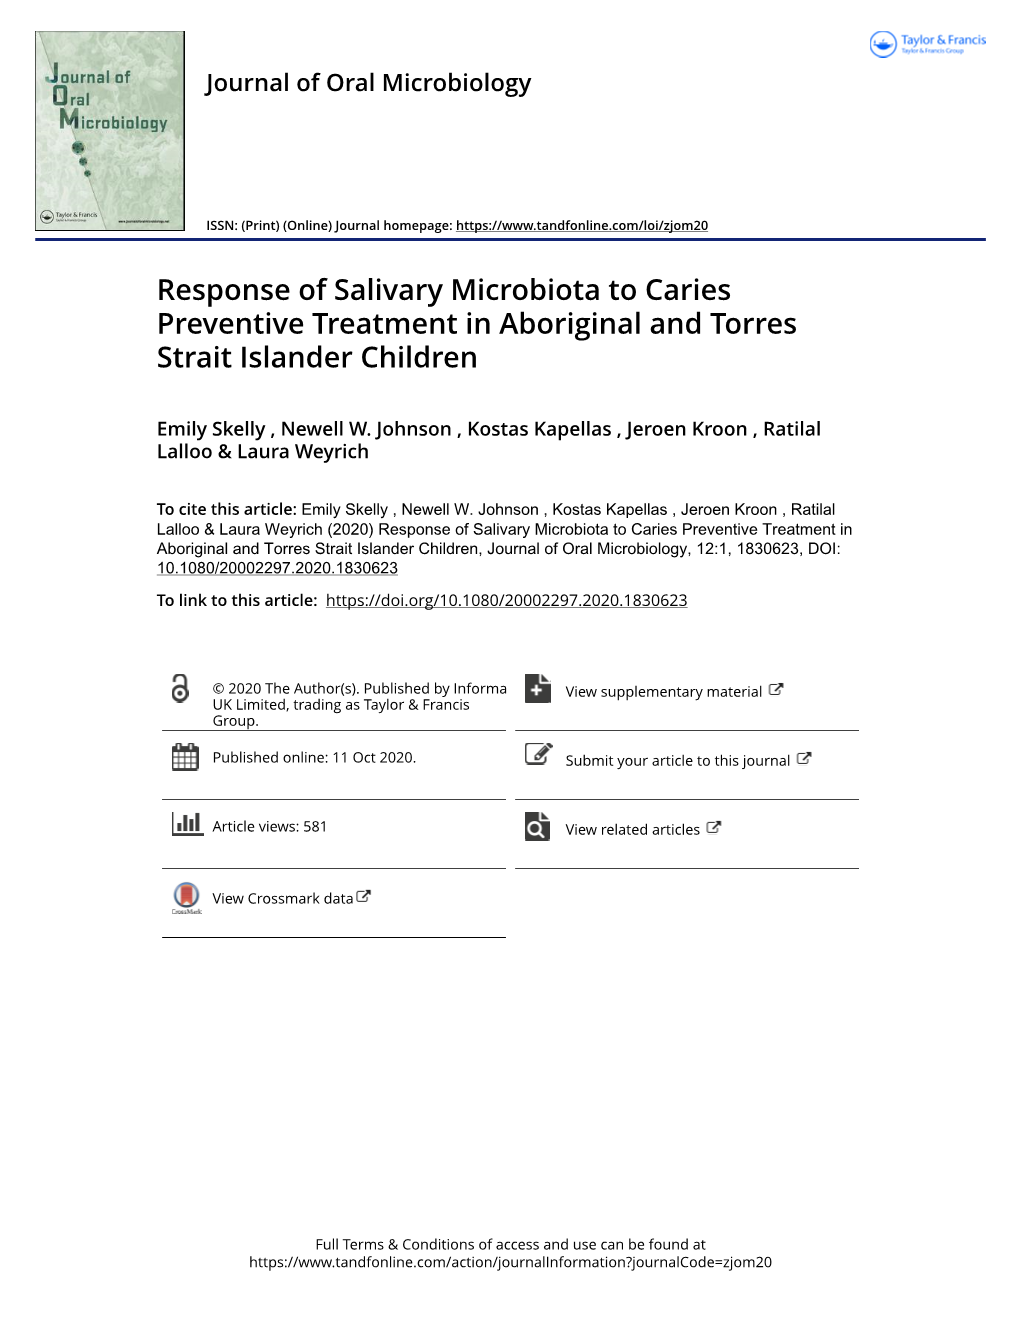 Response of Salivary Microbiota to Caries Preventive Treatment in Aboriginal and Torres Strait Islander Children